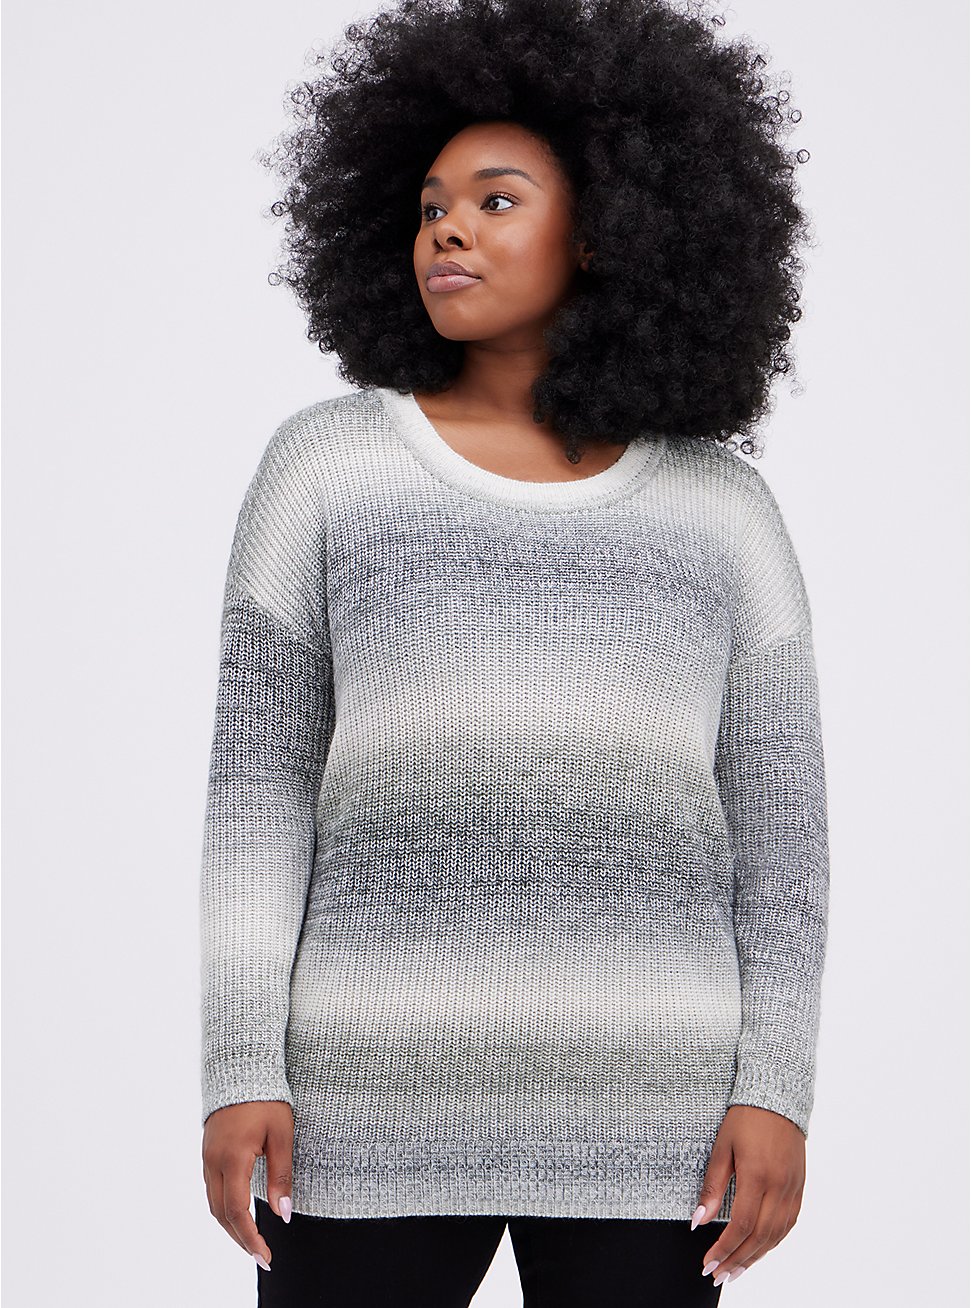 Drop Shoulder Tunic Sweater - Space Dye Black, White & Grey, , hi-res